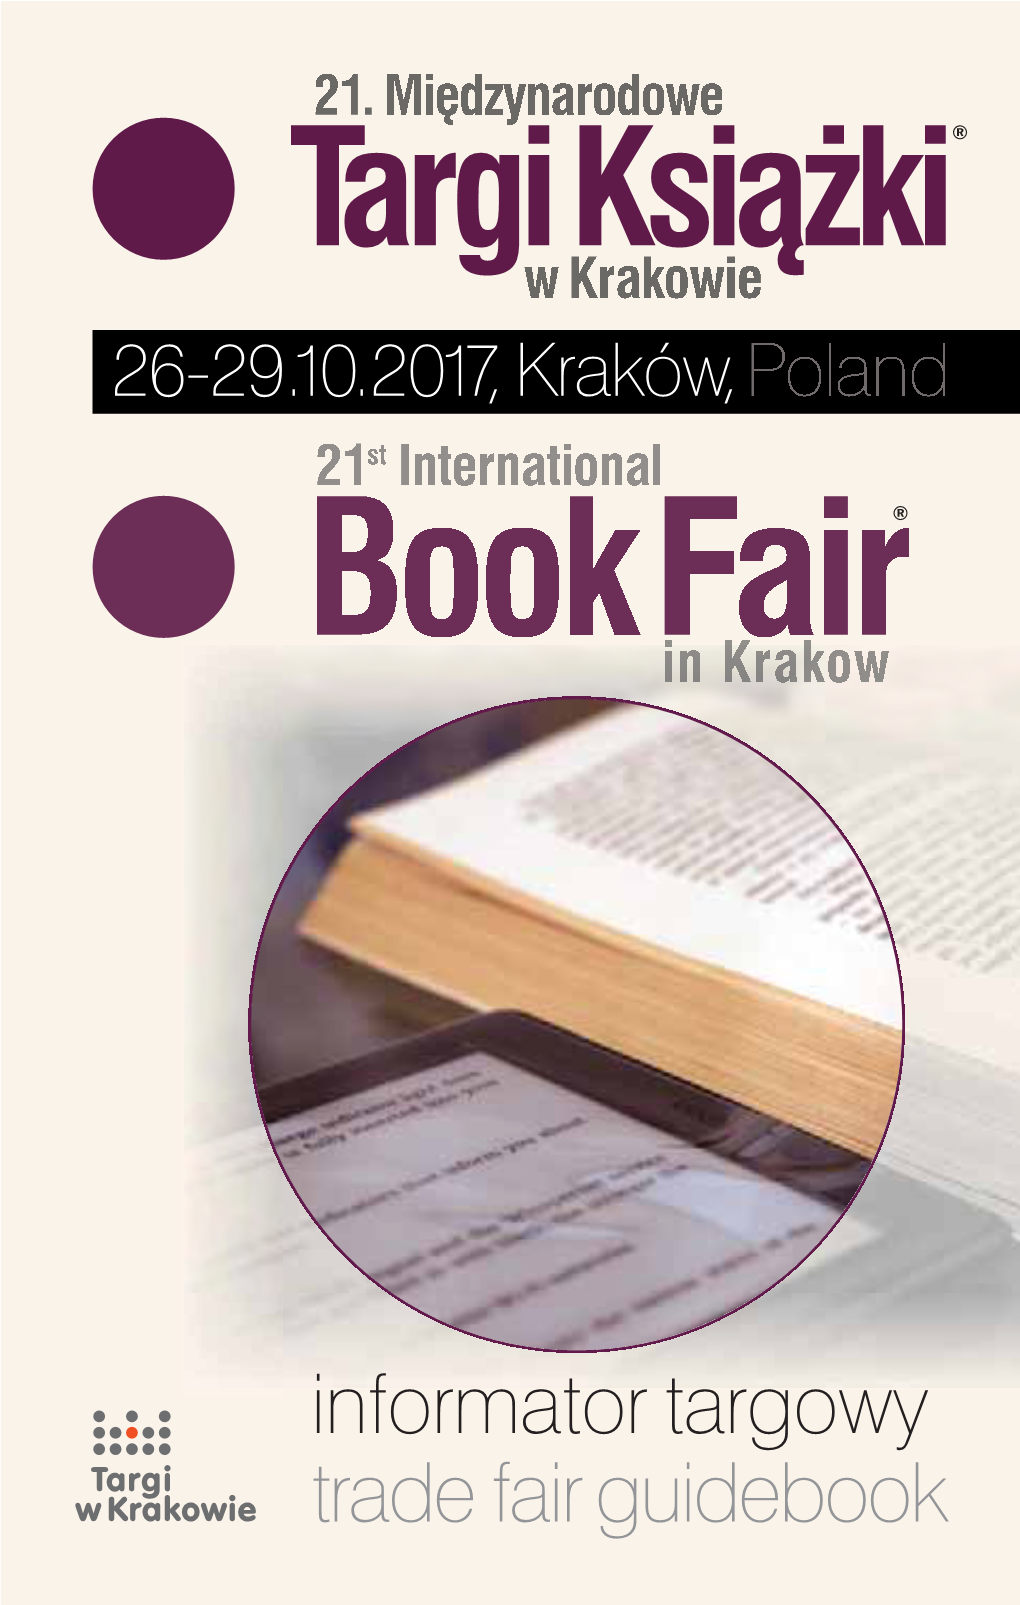 Targiksià˝Ki ® 26-29.10.2017,Kraków